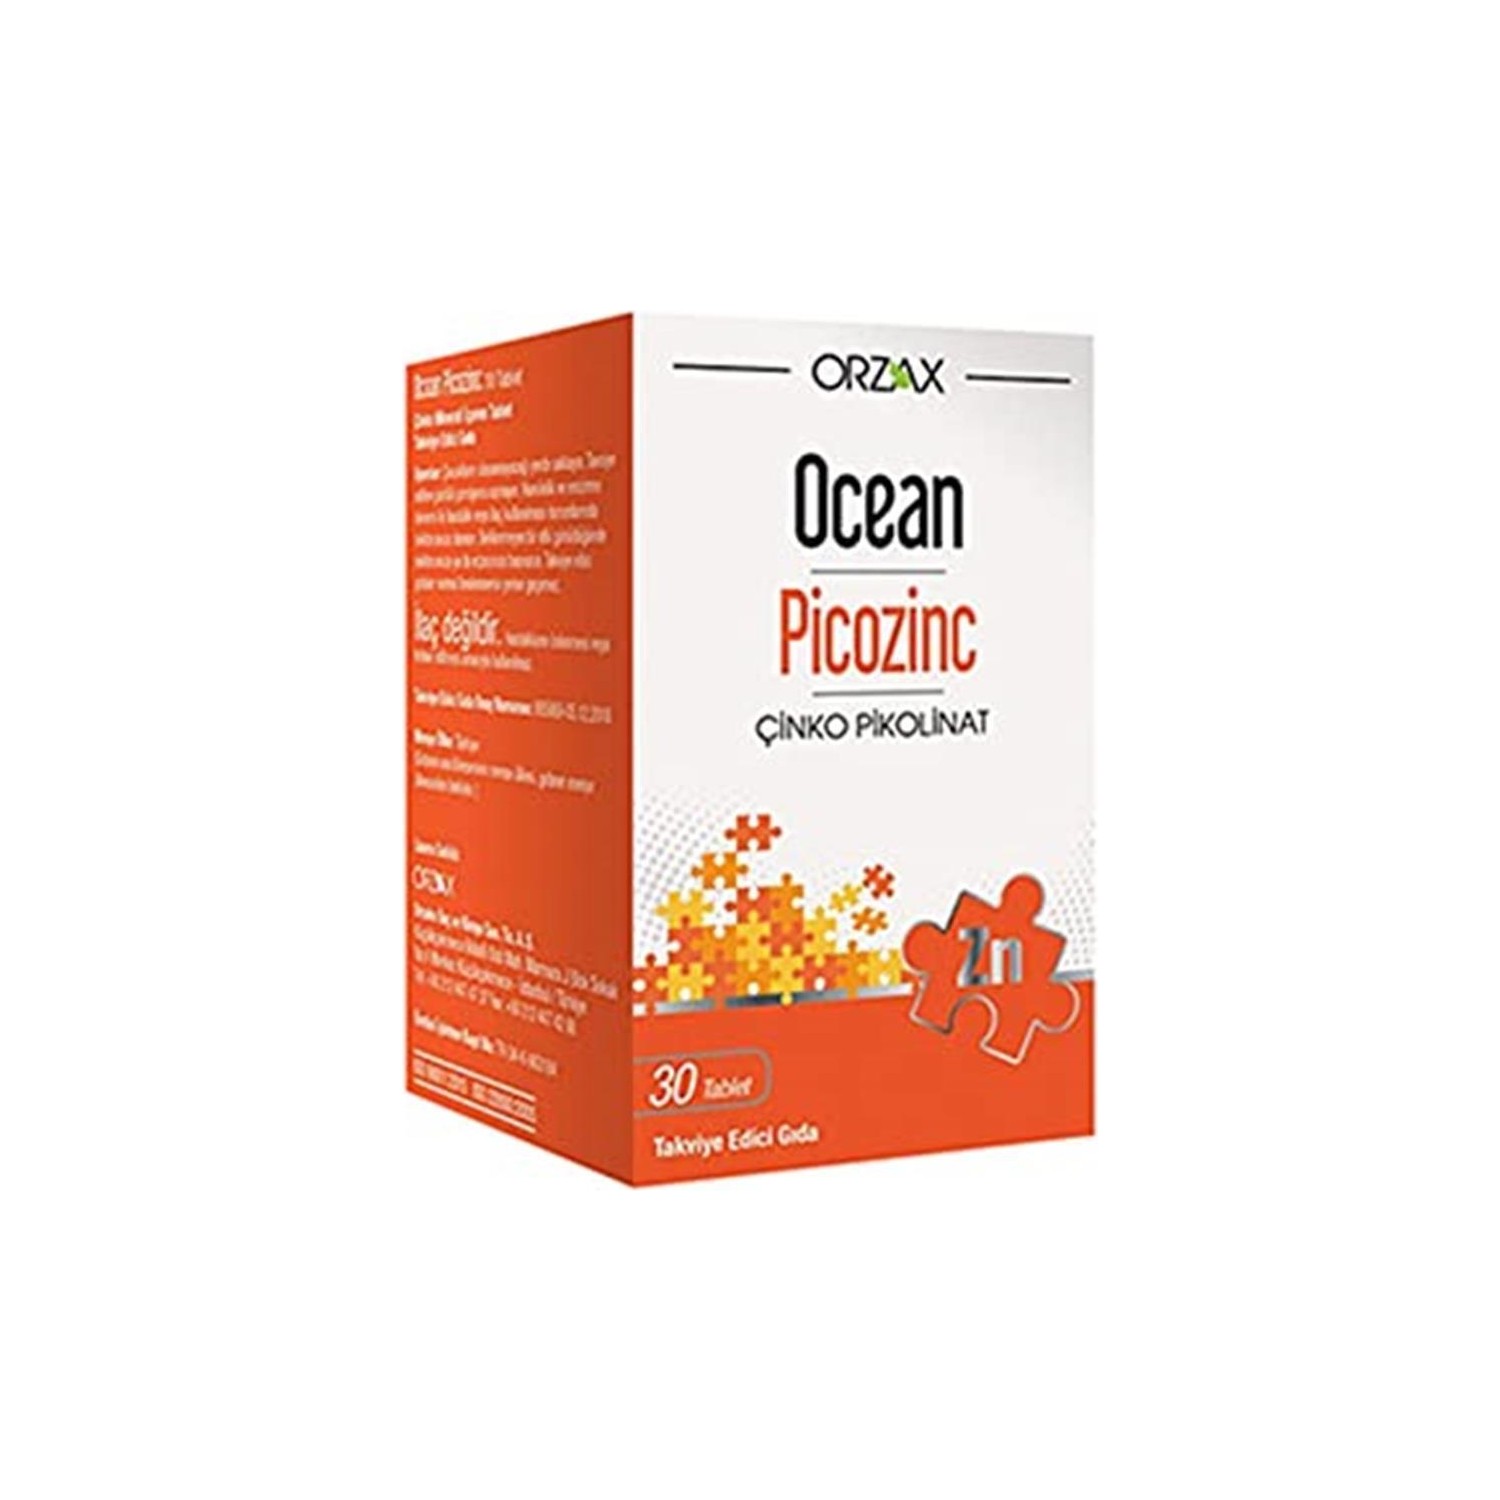 Пищевая добавка Ocean Picozinc Cinko, 30 таблеток пищевая добавка ocean picozinc cinko picolinate 30 таблеток